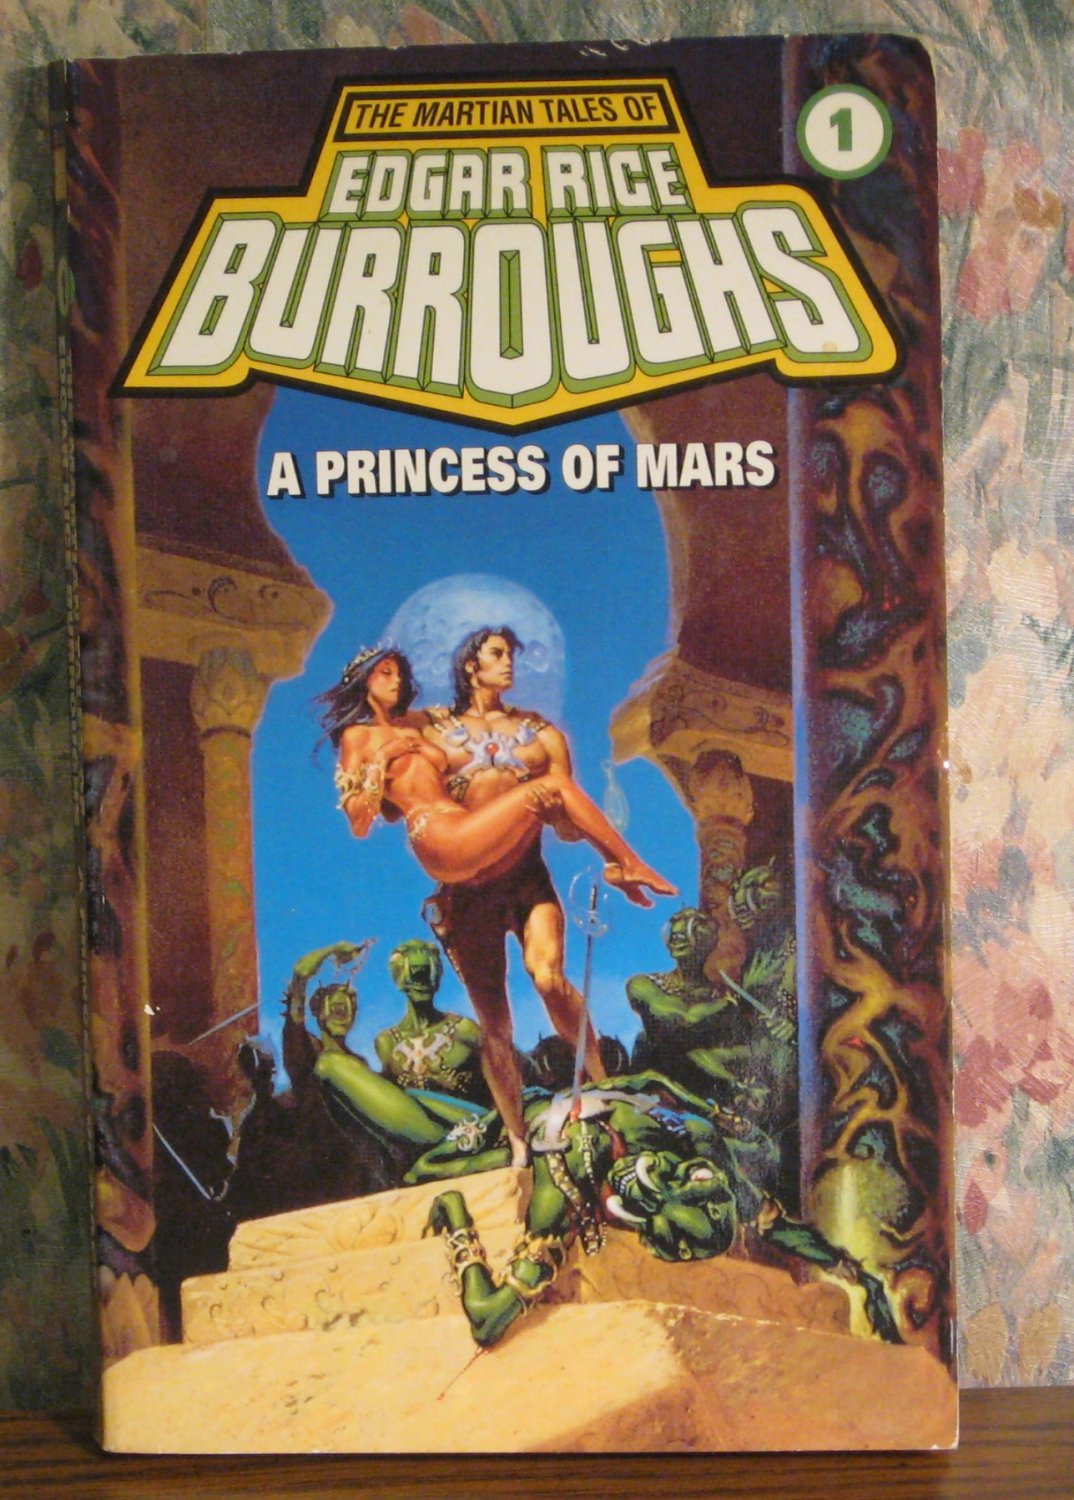 Works of Edgar Rice Burroughs (Barsoom #1-11) by Edgar Rice Burroughs